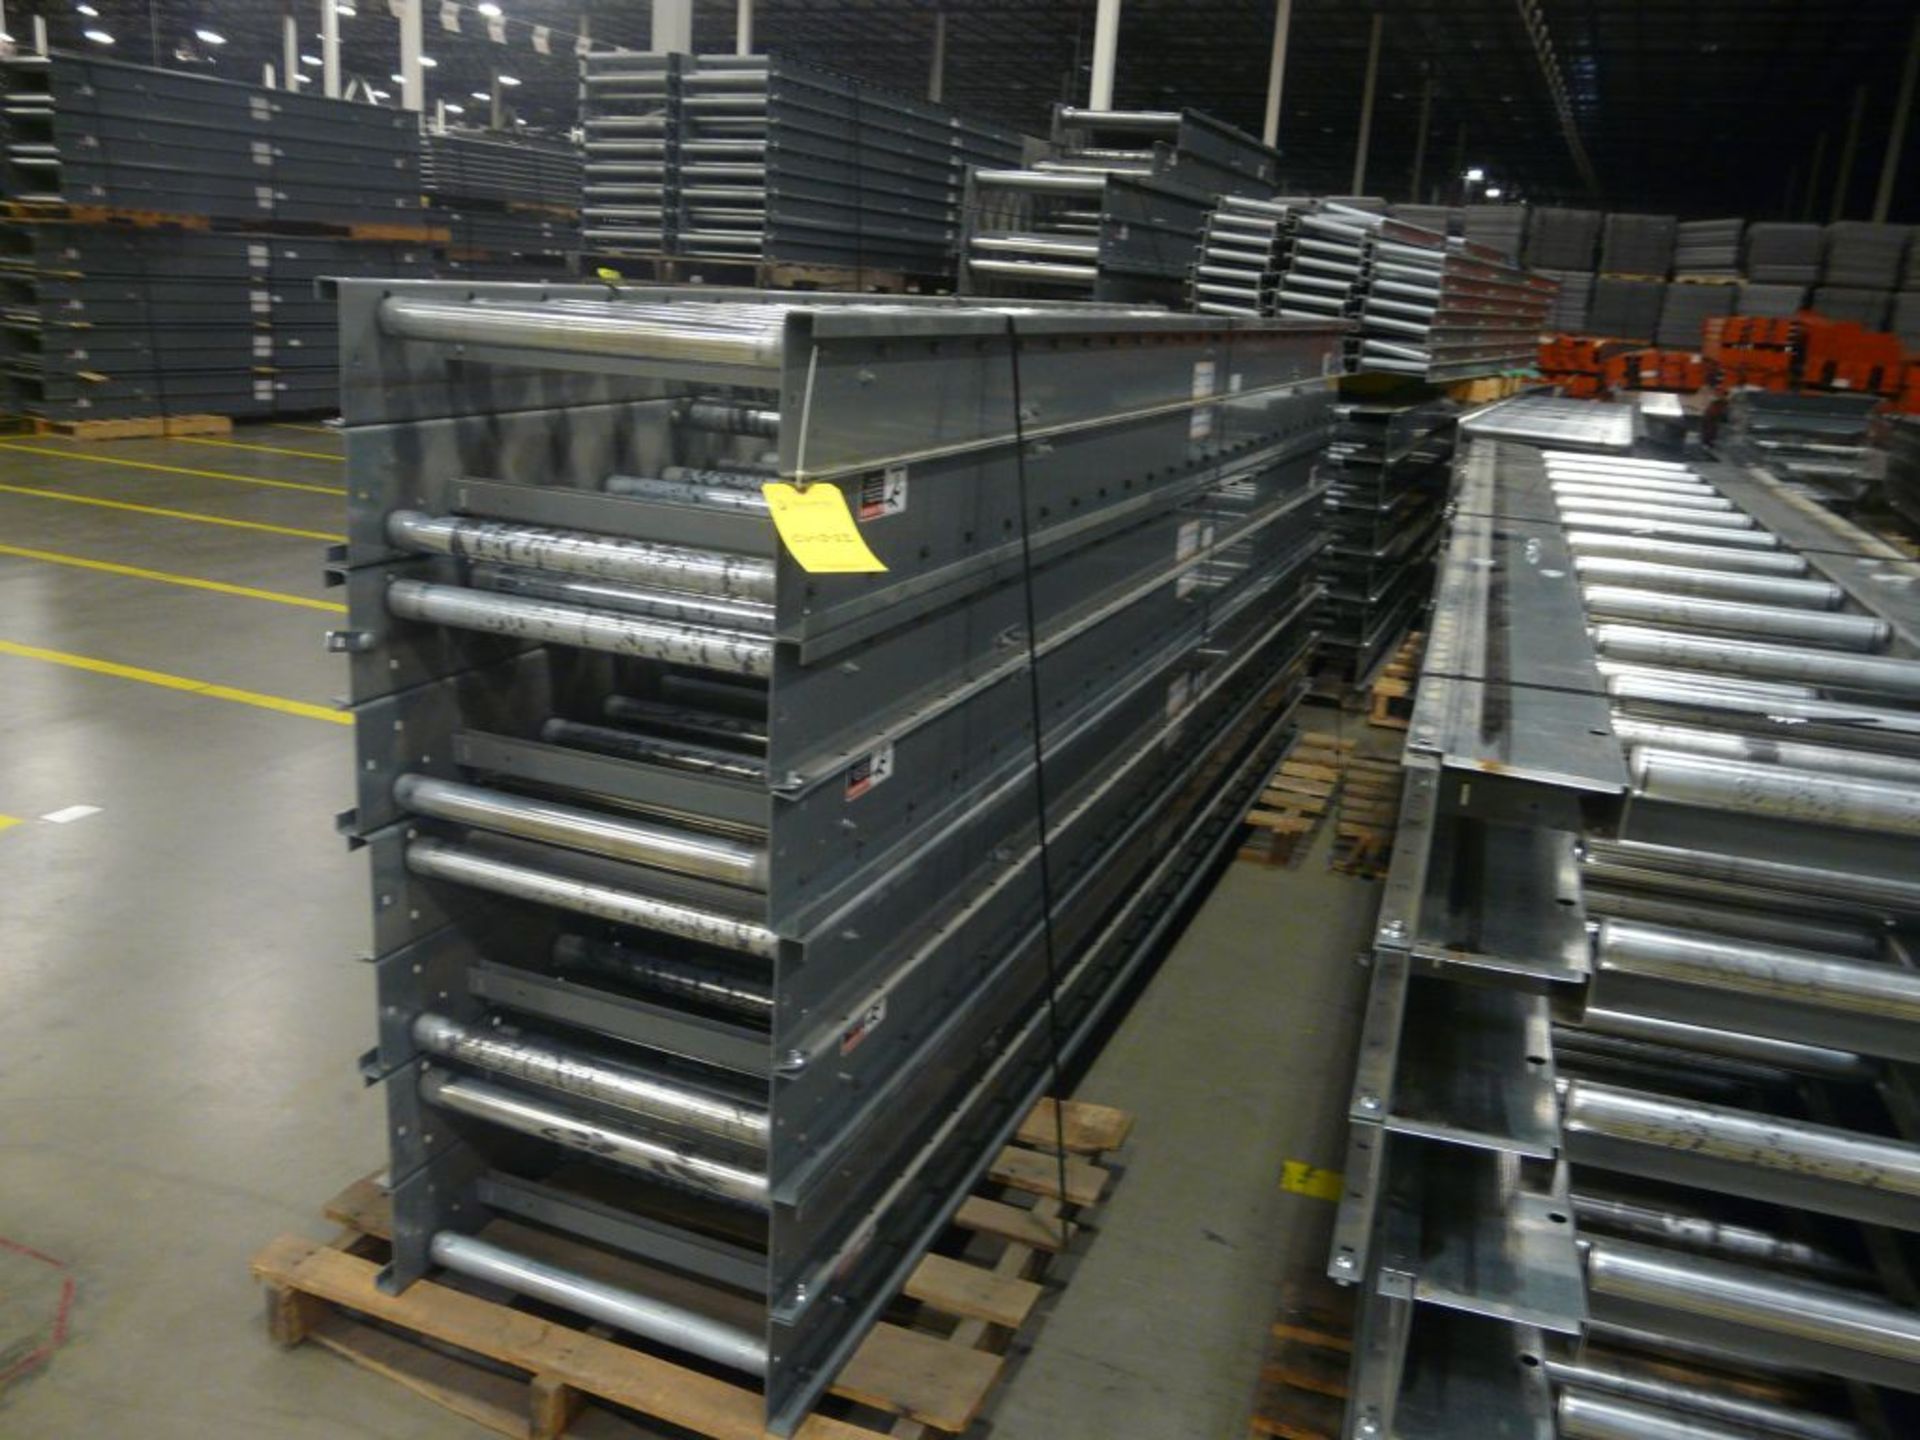 Lot of (30) 200 Belt Intermediate Conveyors - 12'L x 22"W; Tag: 223696 - $30 Lot Loading Fee - Image 2 of 3